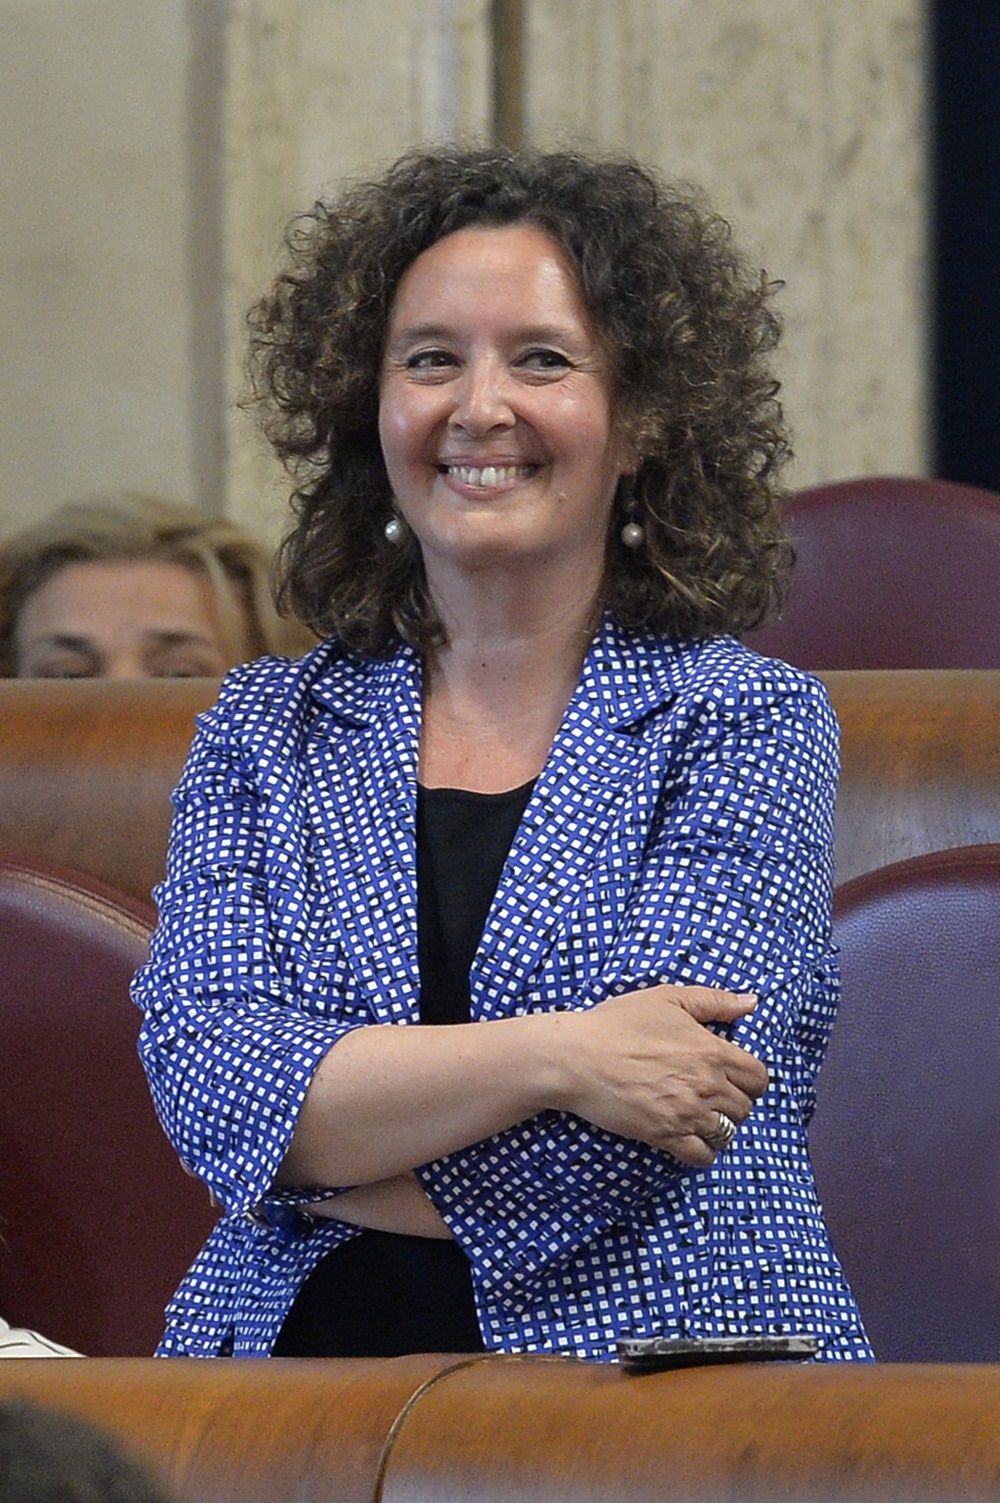 Laura Baldassarre